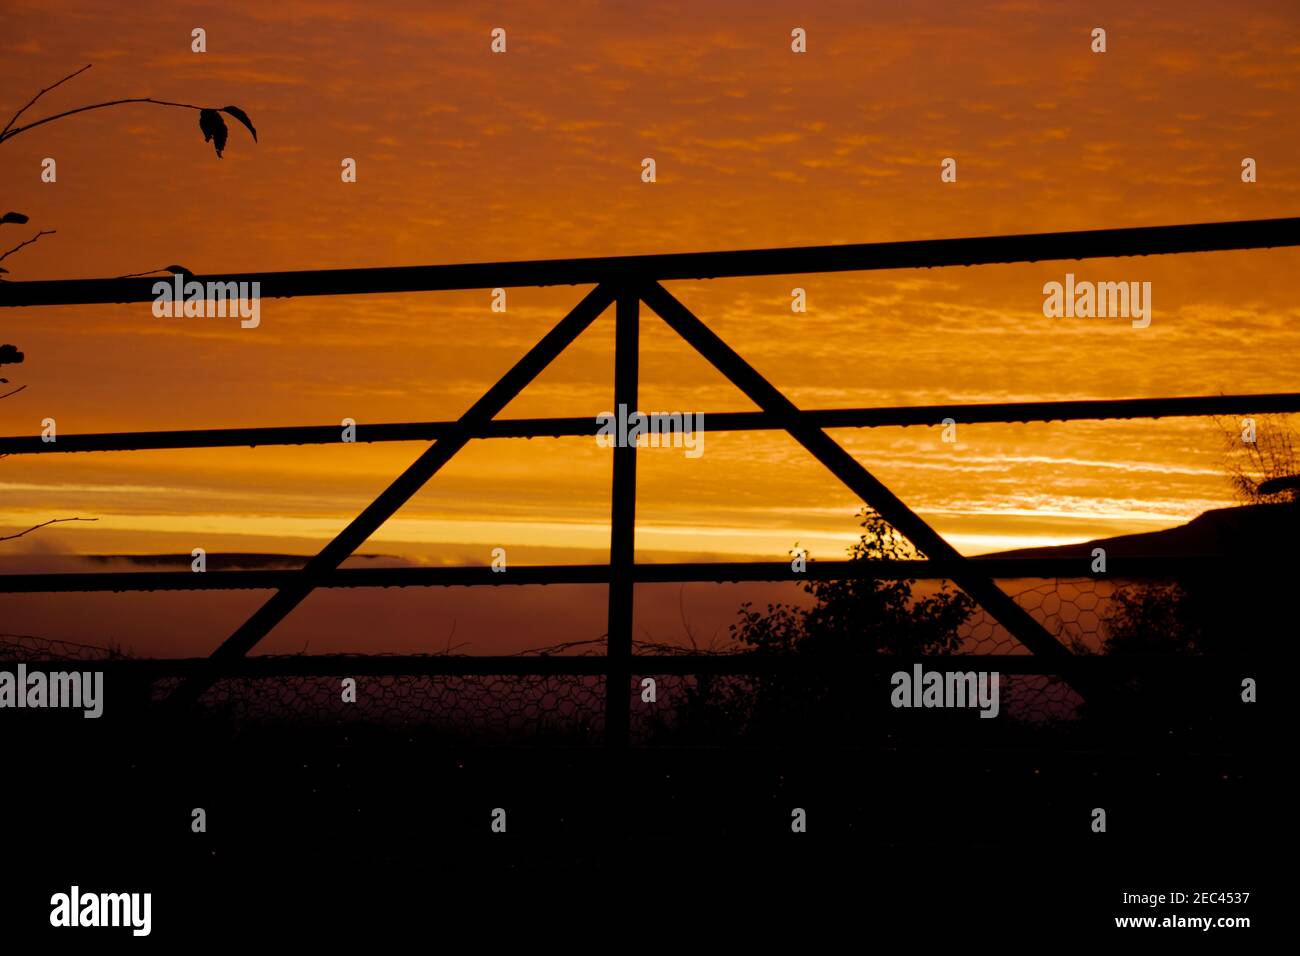 Silhouette of a metal gate & a dramatic sunrise Stock Photo